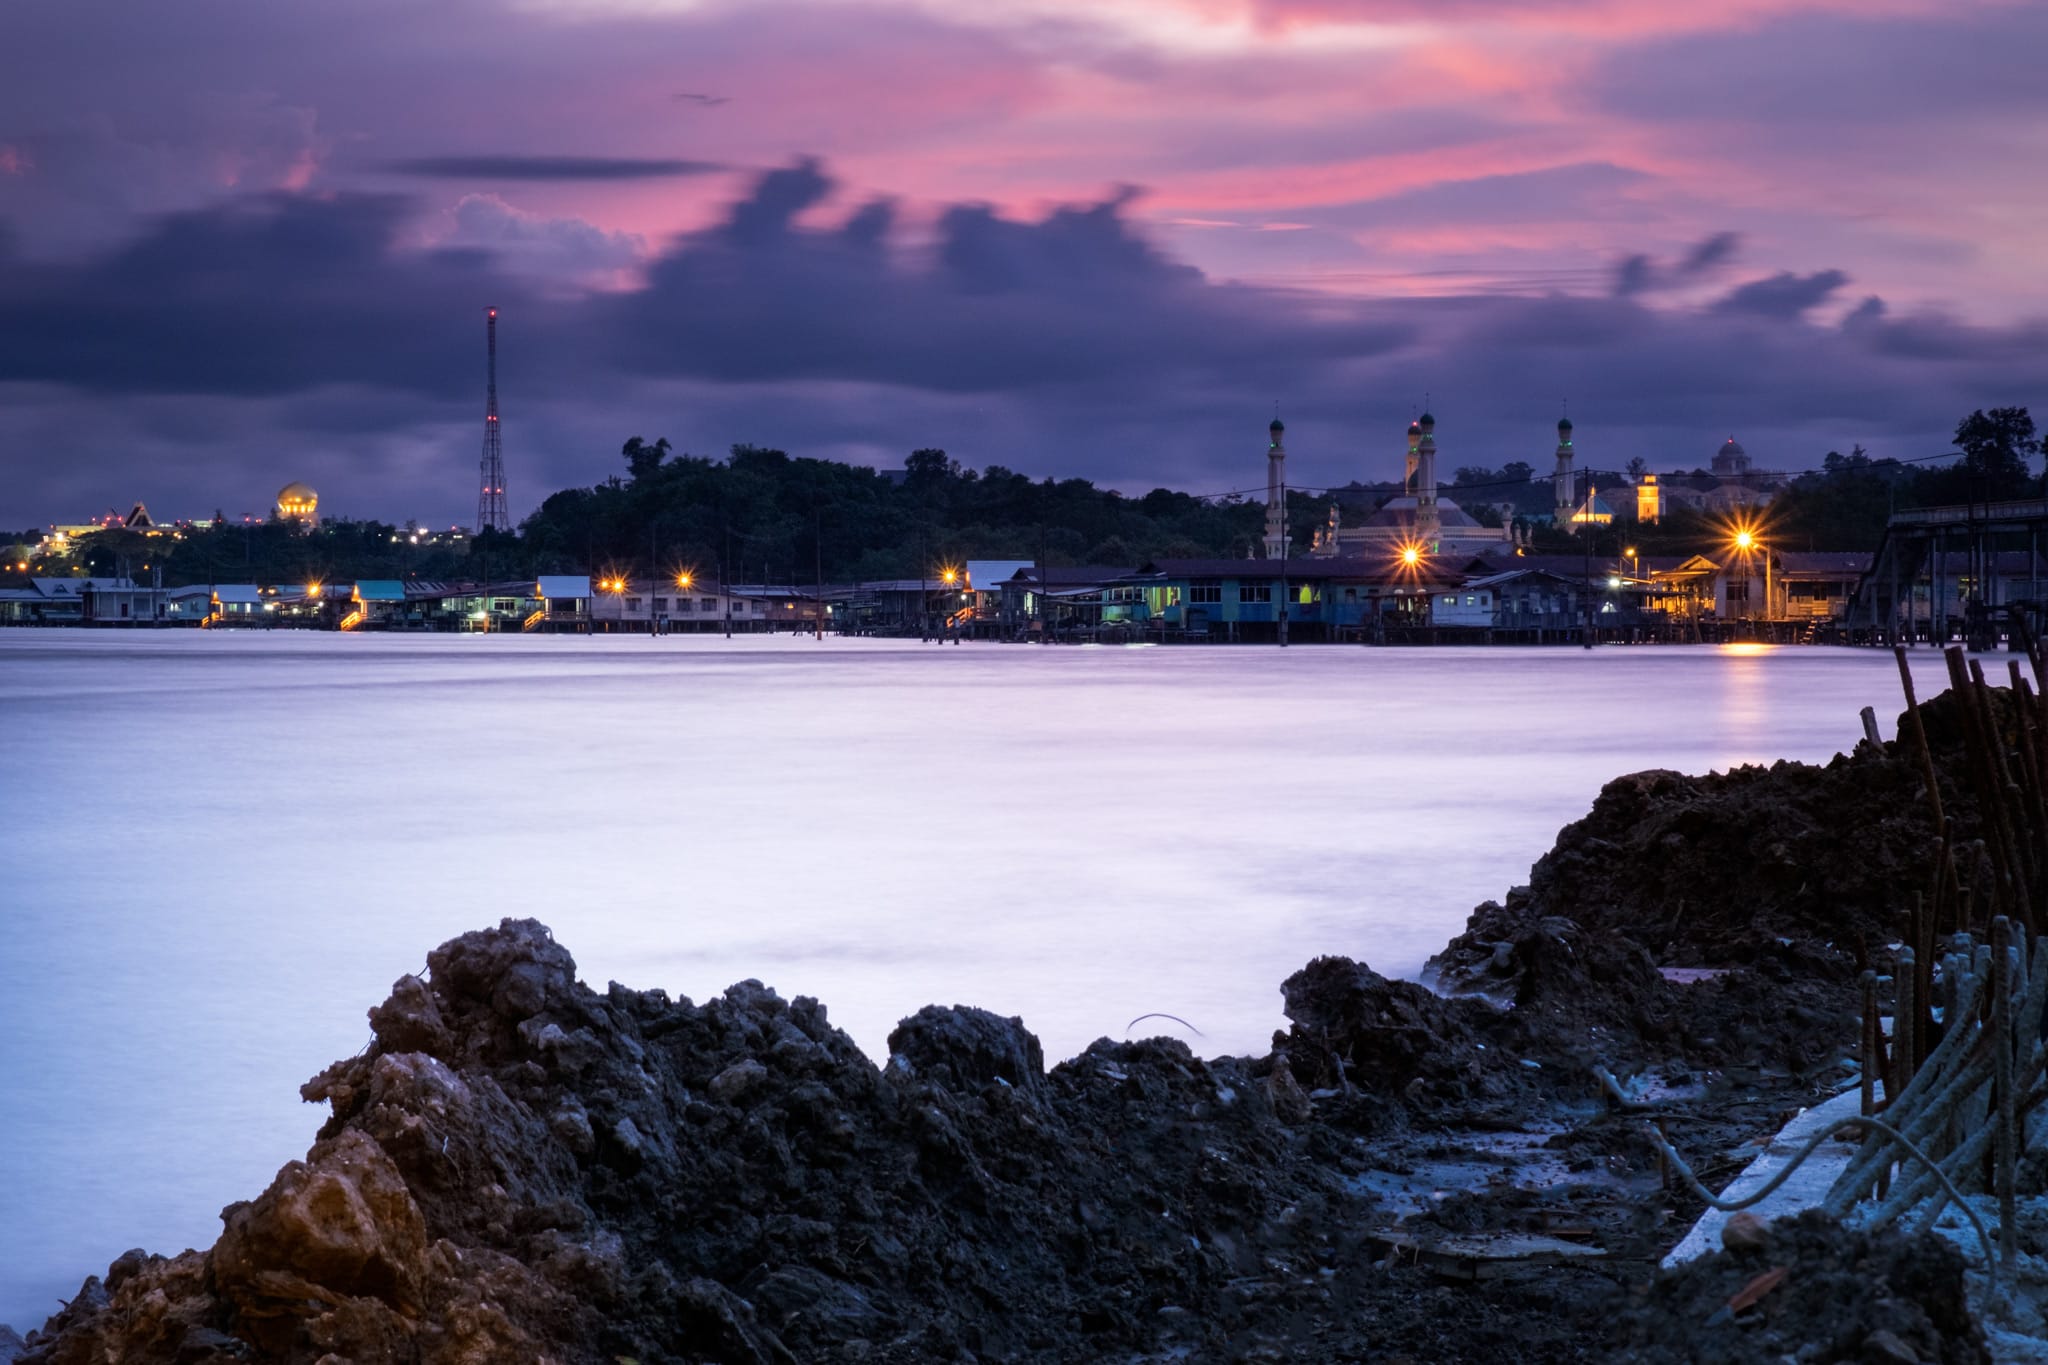 Brunei River and Kampong Ayer (water village) of Bandar Seri Begawan in Brunei at twilight.